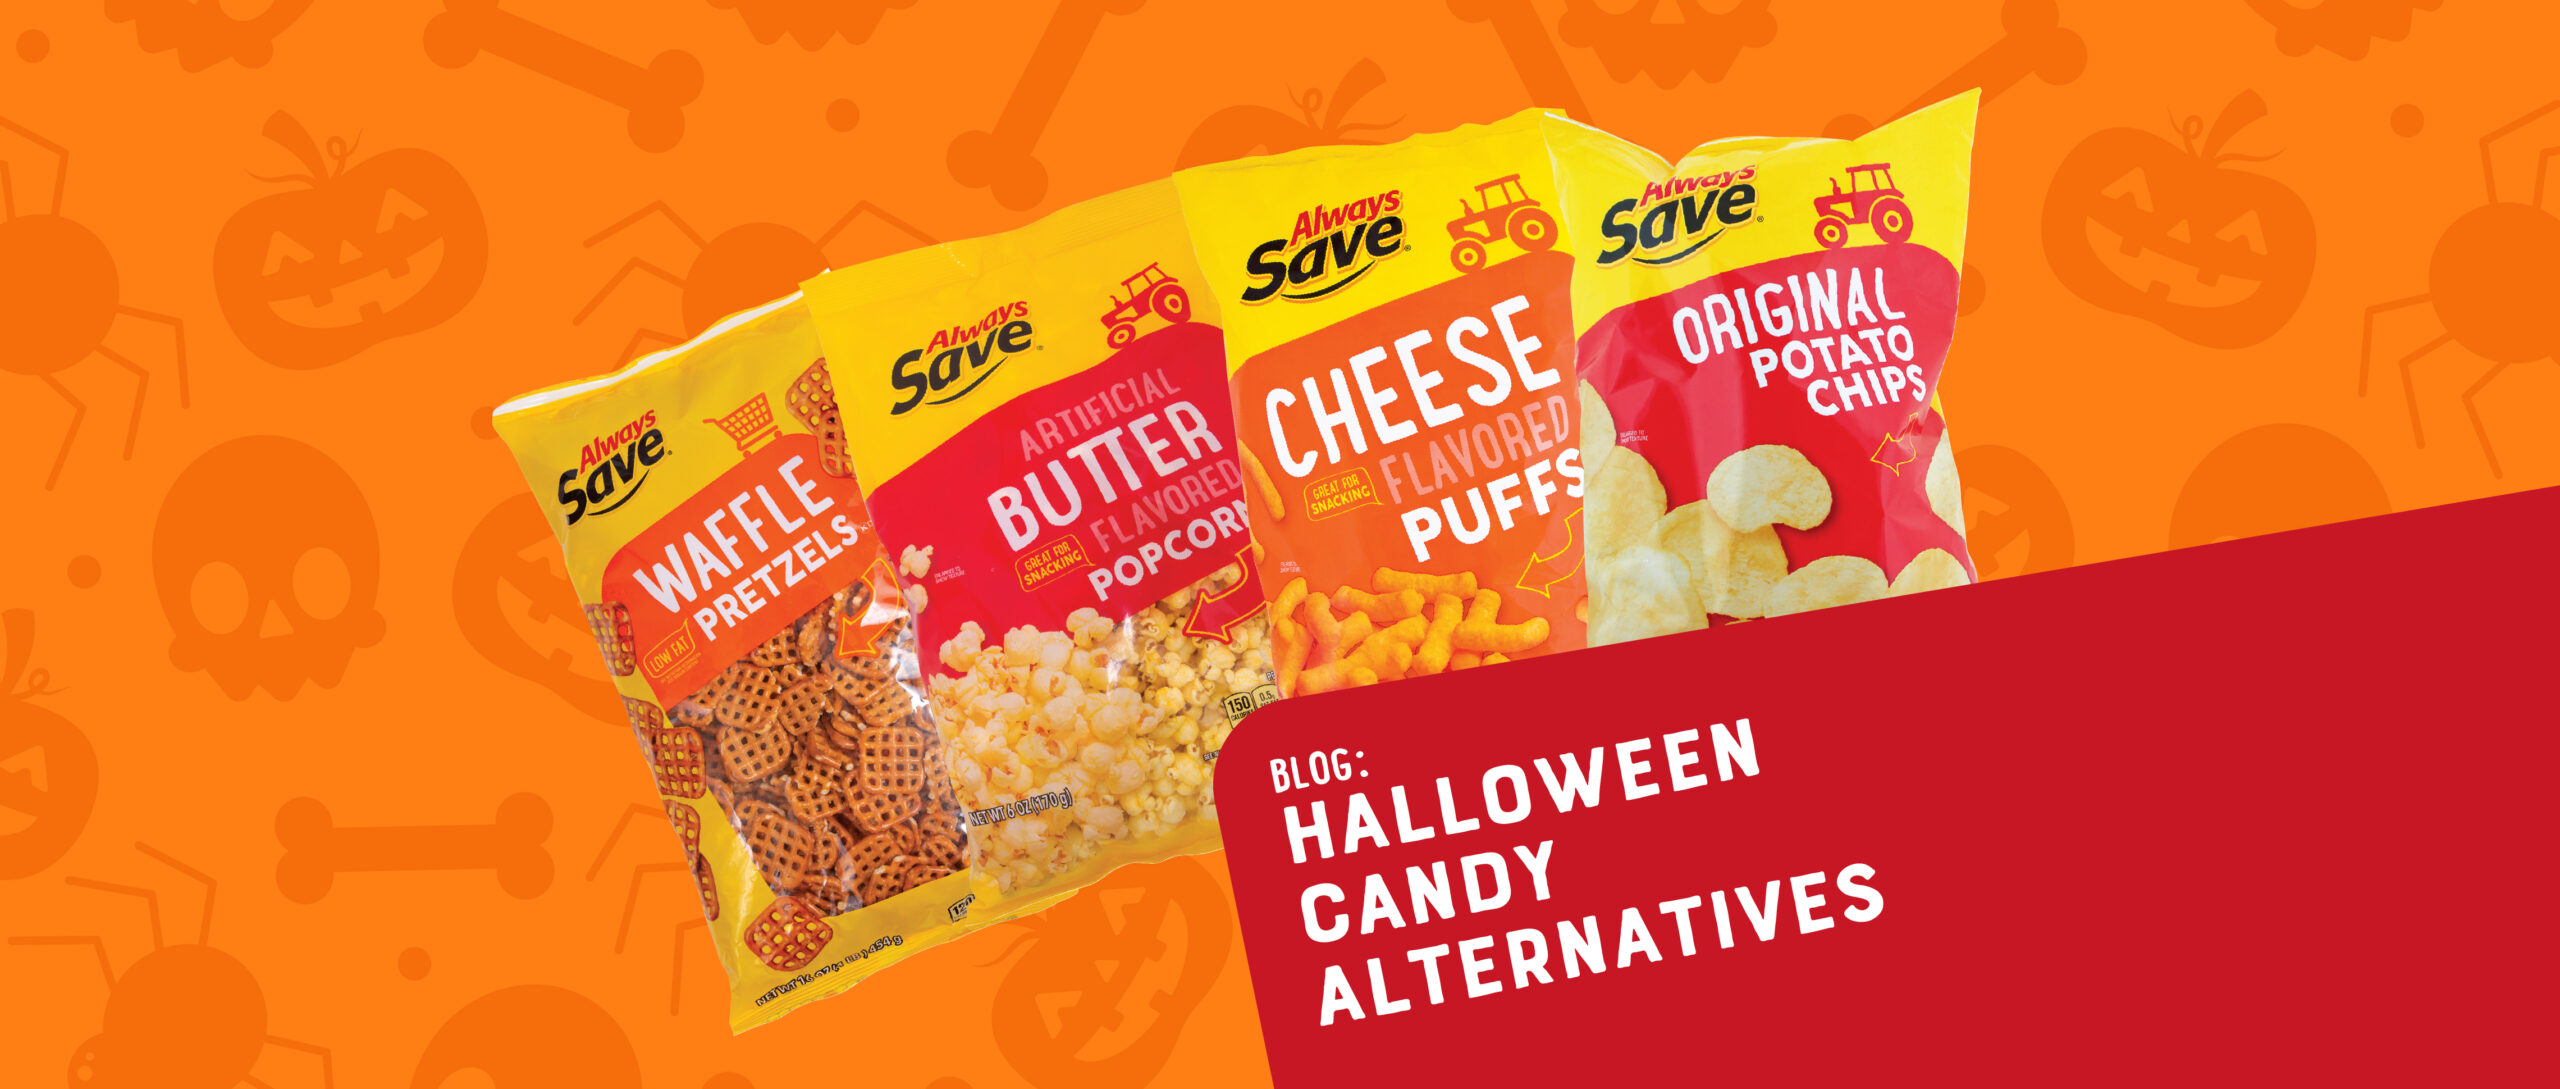 Halloween Candy Alternatives